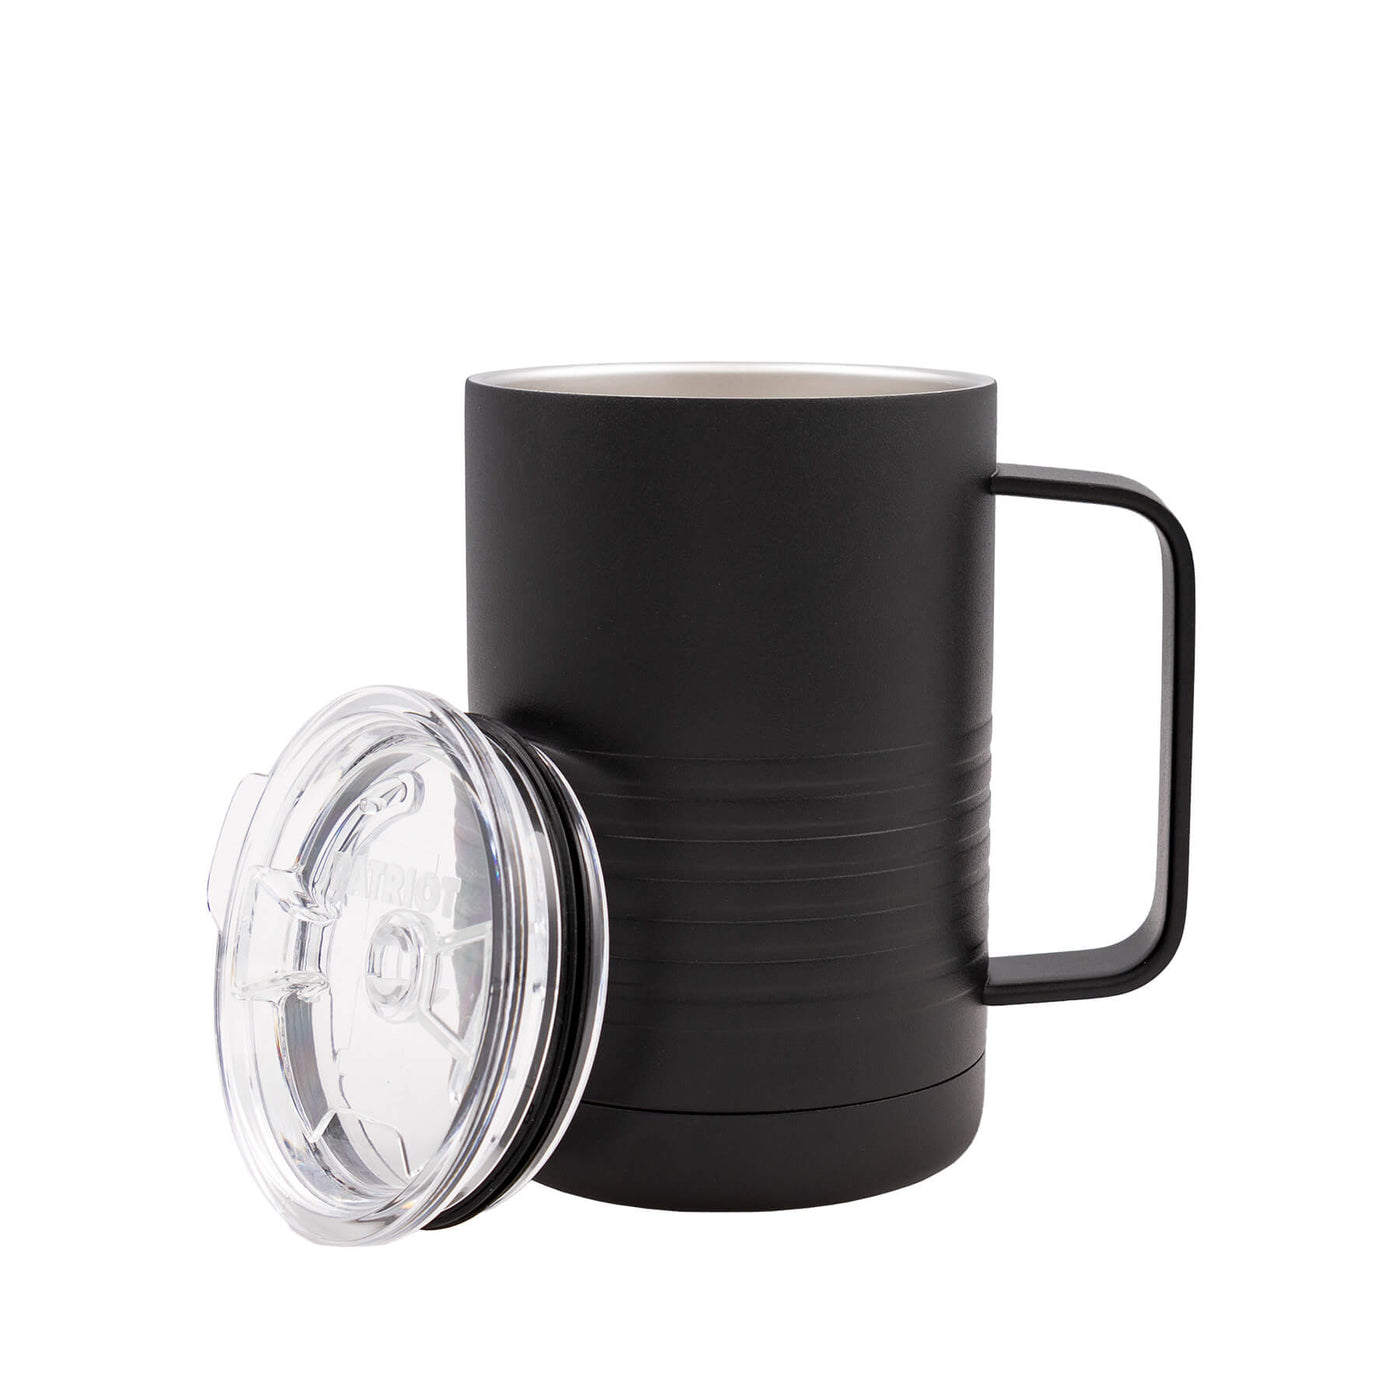 Sumatra 16 Oz Travel Mug, Insulated Travel Coffee Mug